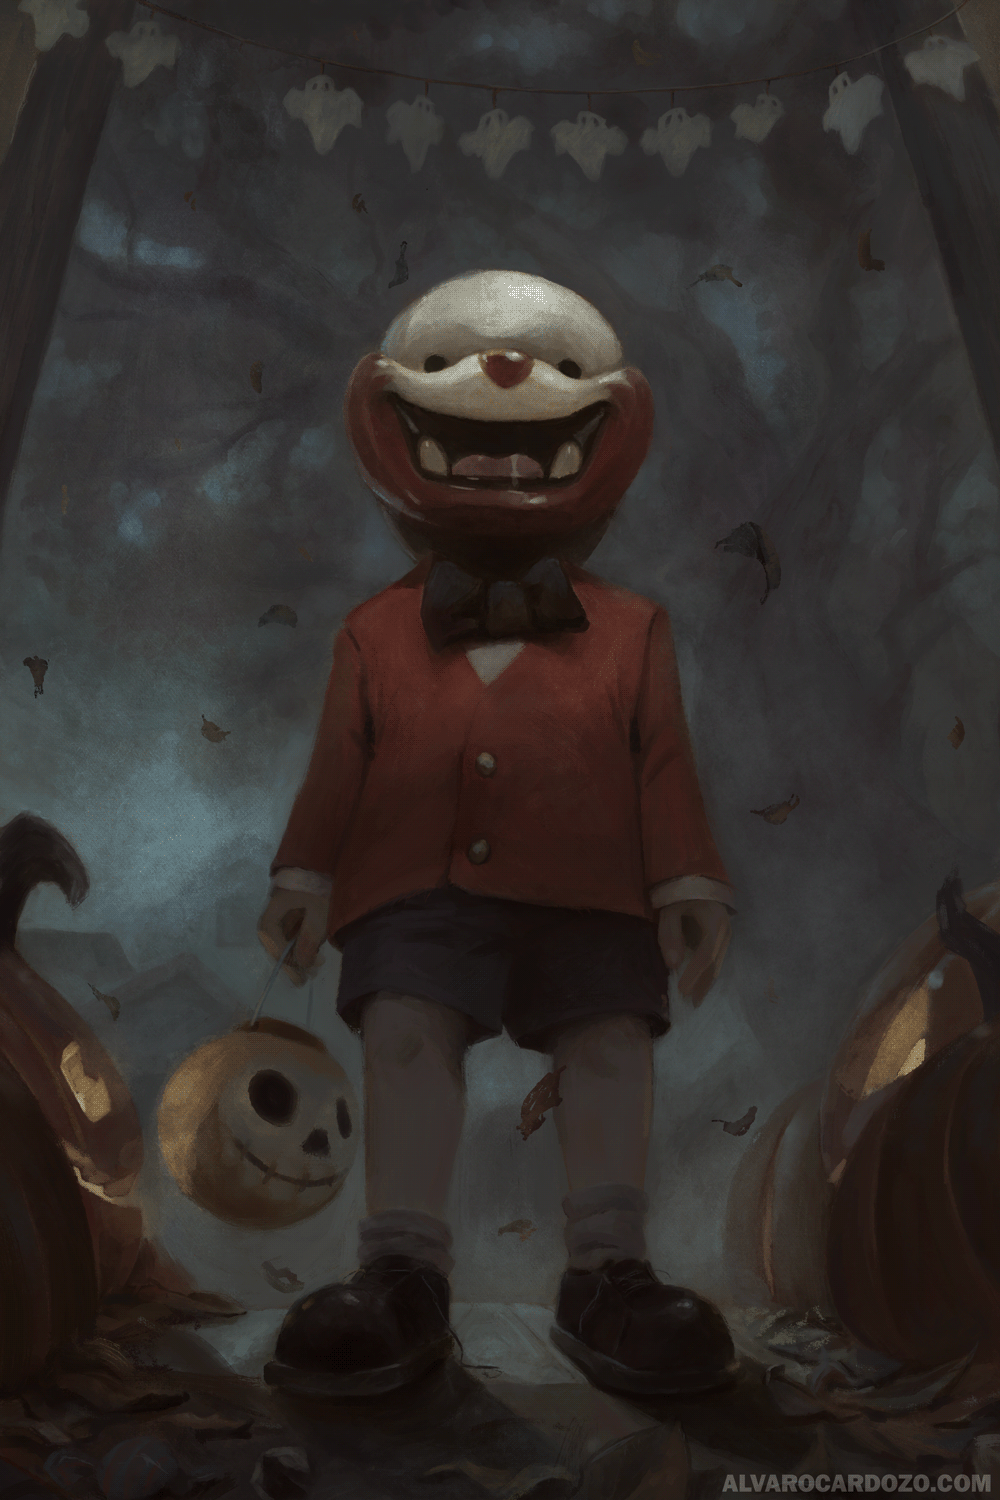 Alvaro Cardozo digital illustration Halloween horror night spooky weird